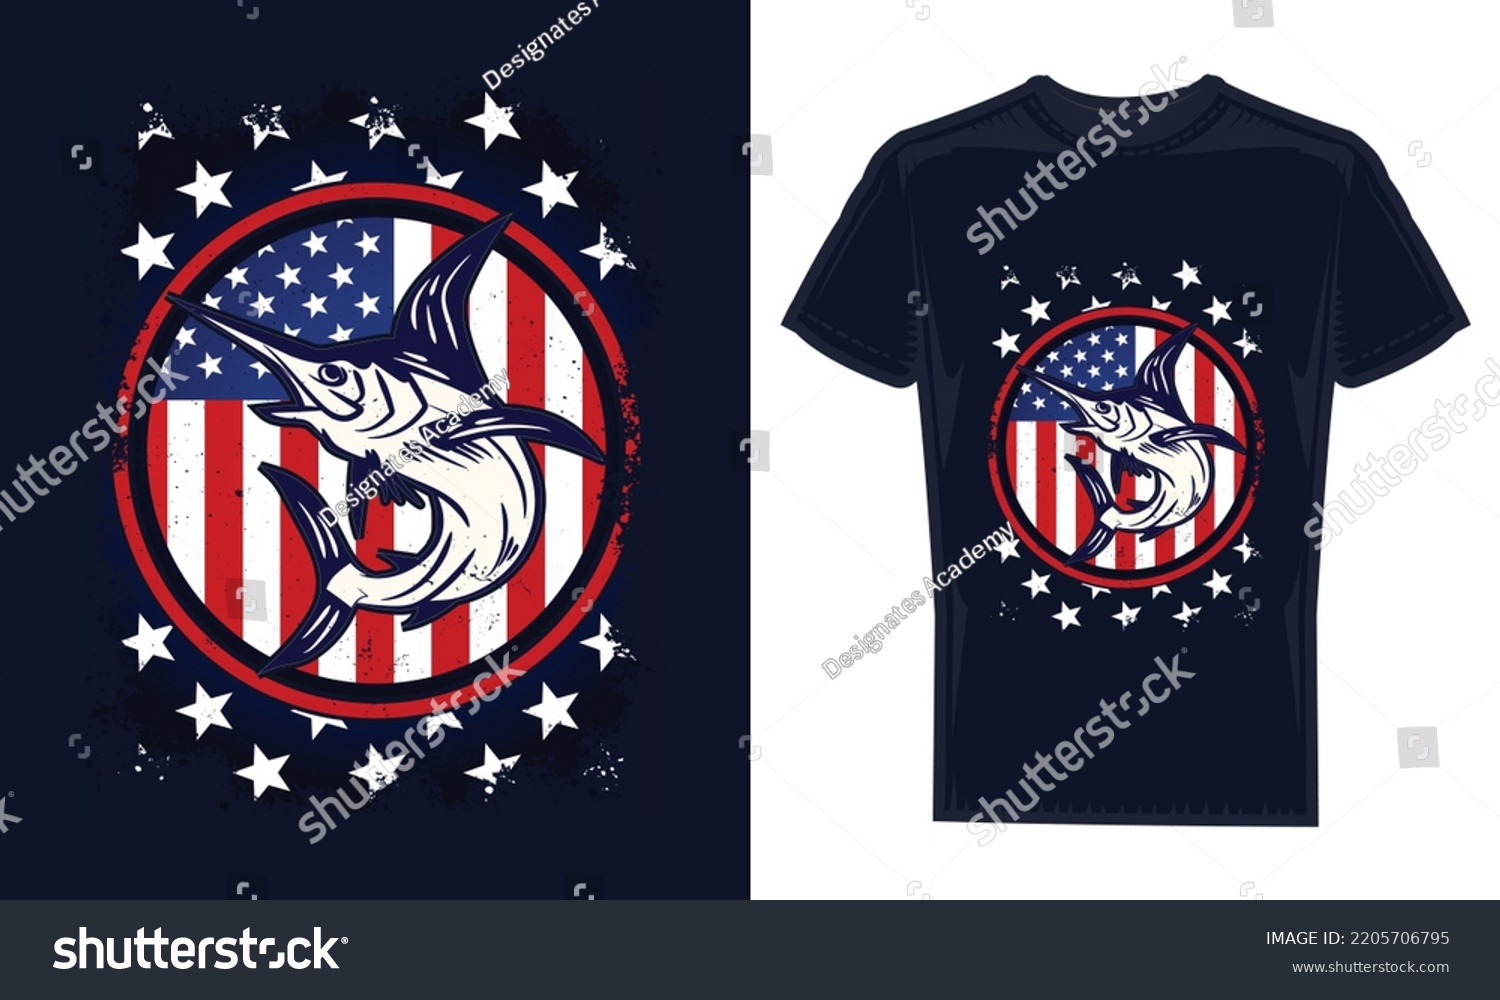 SVG of vector. Fisherman Svg, Gift For Fisherman, Funny Catfishing Shirt, Gift For Dad, 
Fish Shirt svg